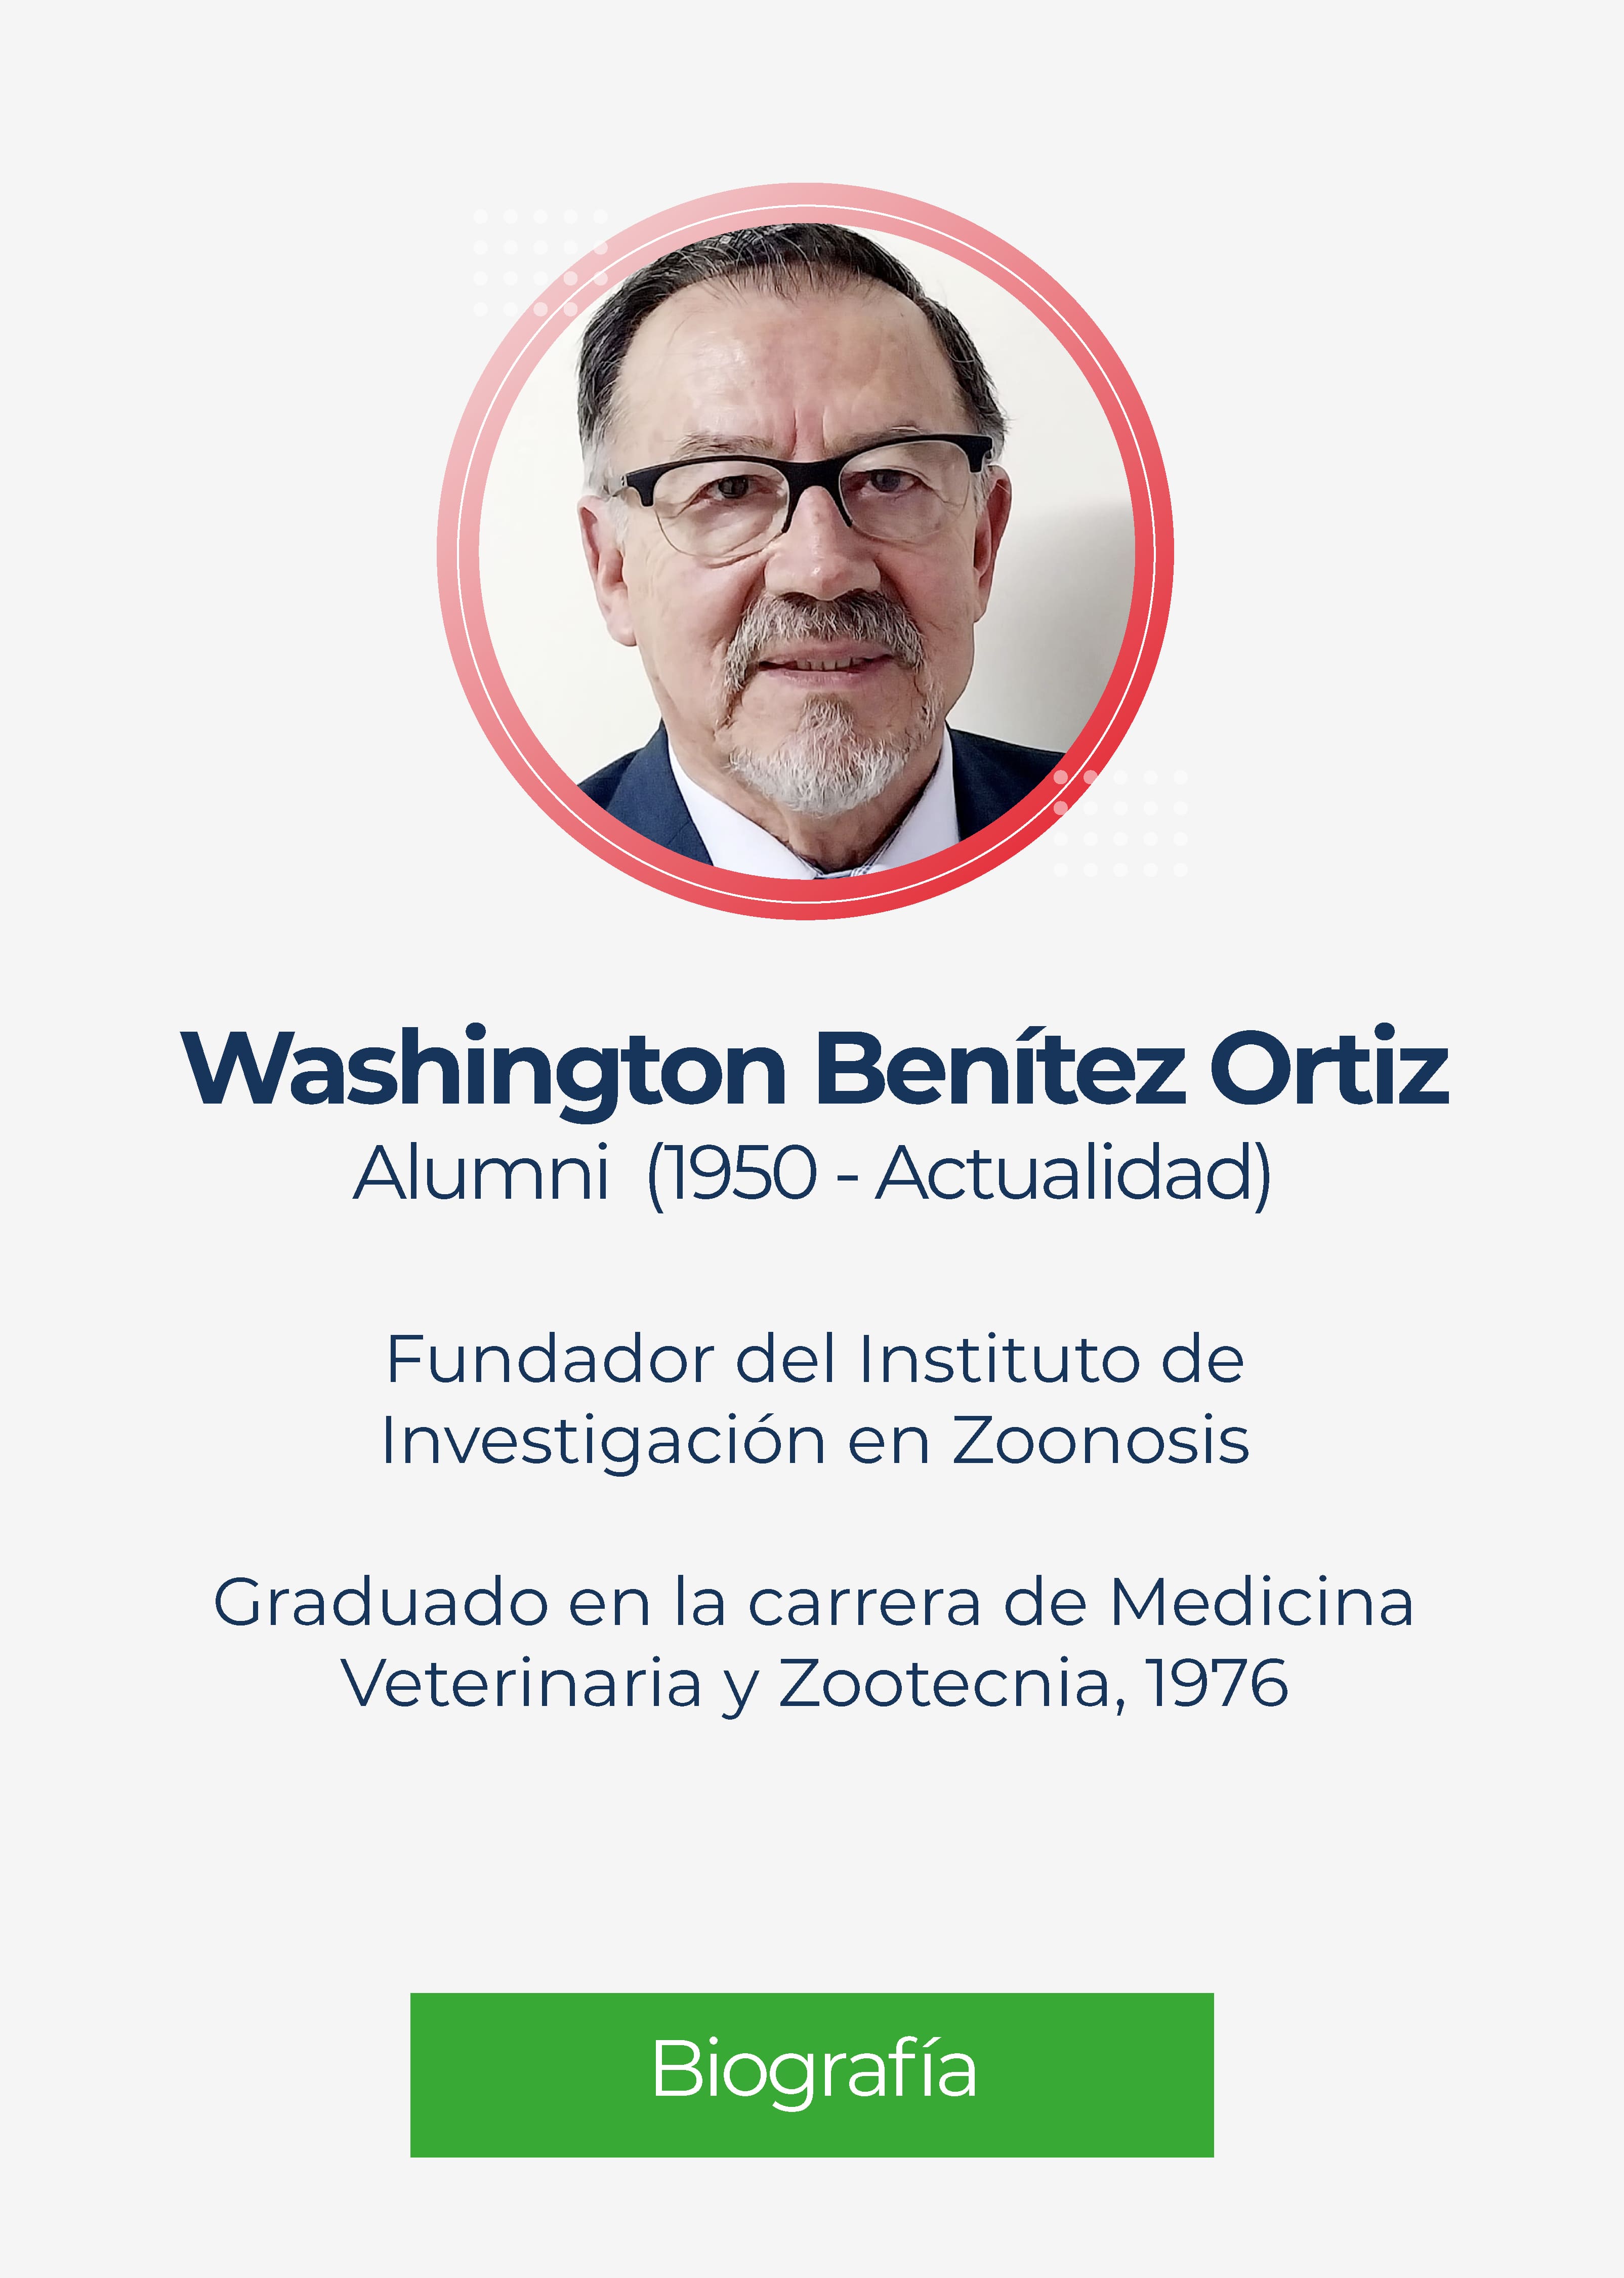 Washington Vicente Benítez Ortiz